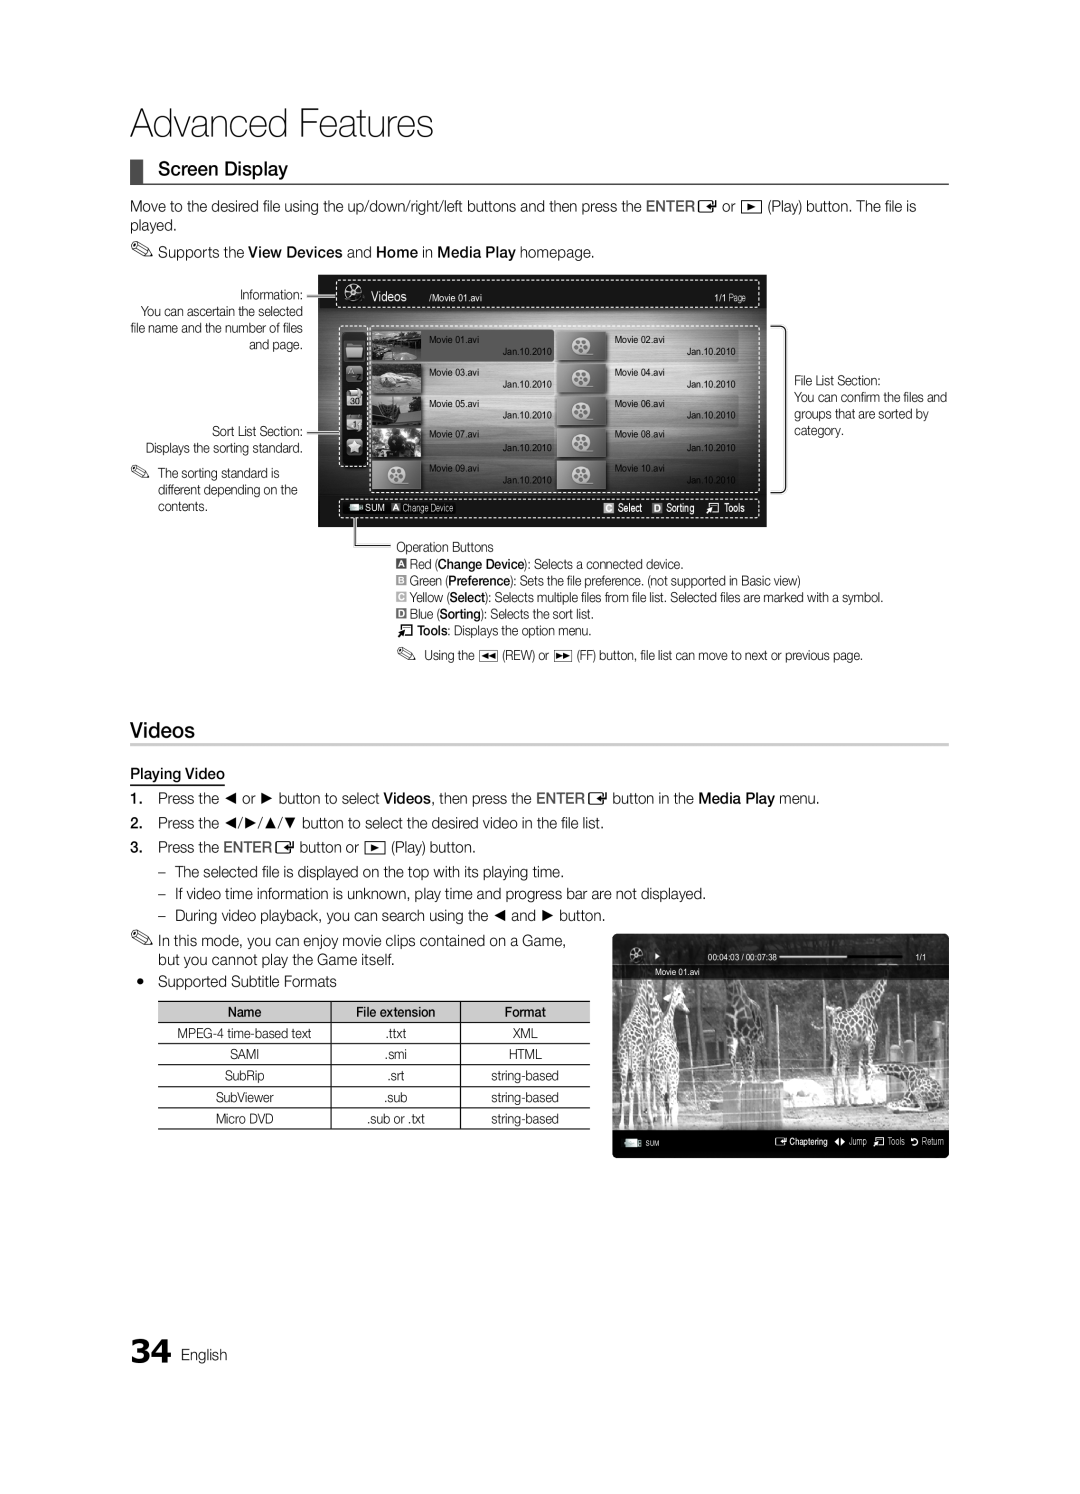 Samsung UN55C6900, BN68-02924A-02, UN46C6900 user manual Videos, Screen Display, Advanced Features 